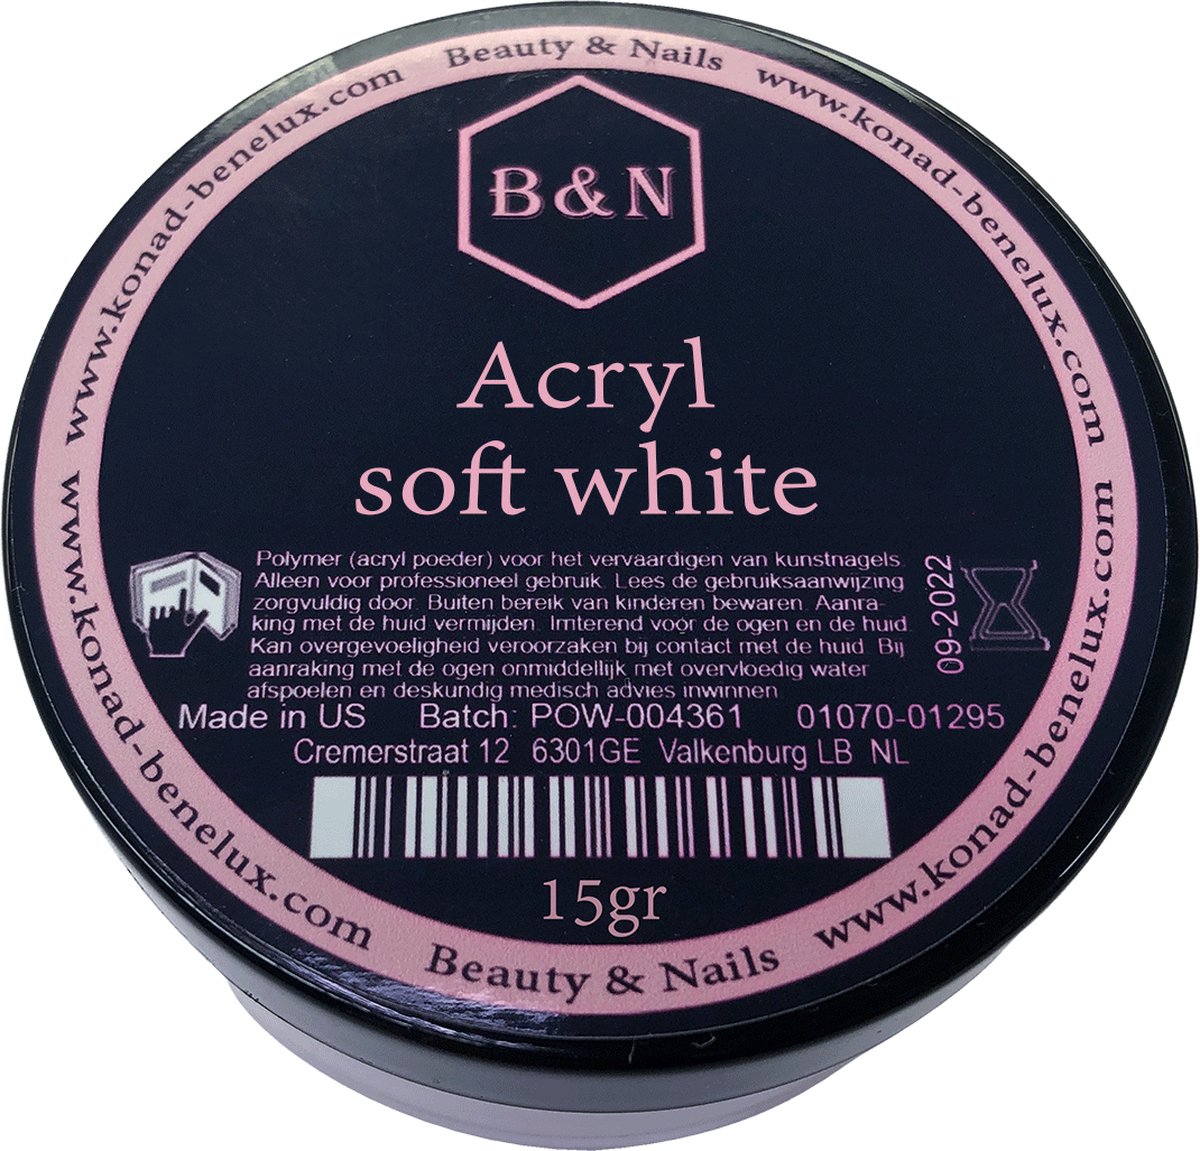 Acryl - soft white - 15 gr | B&N - acrylpoeder - VEGAN - acrylpoeder